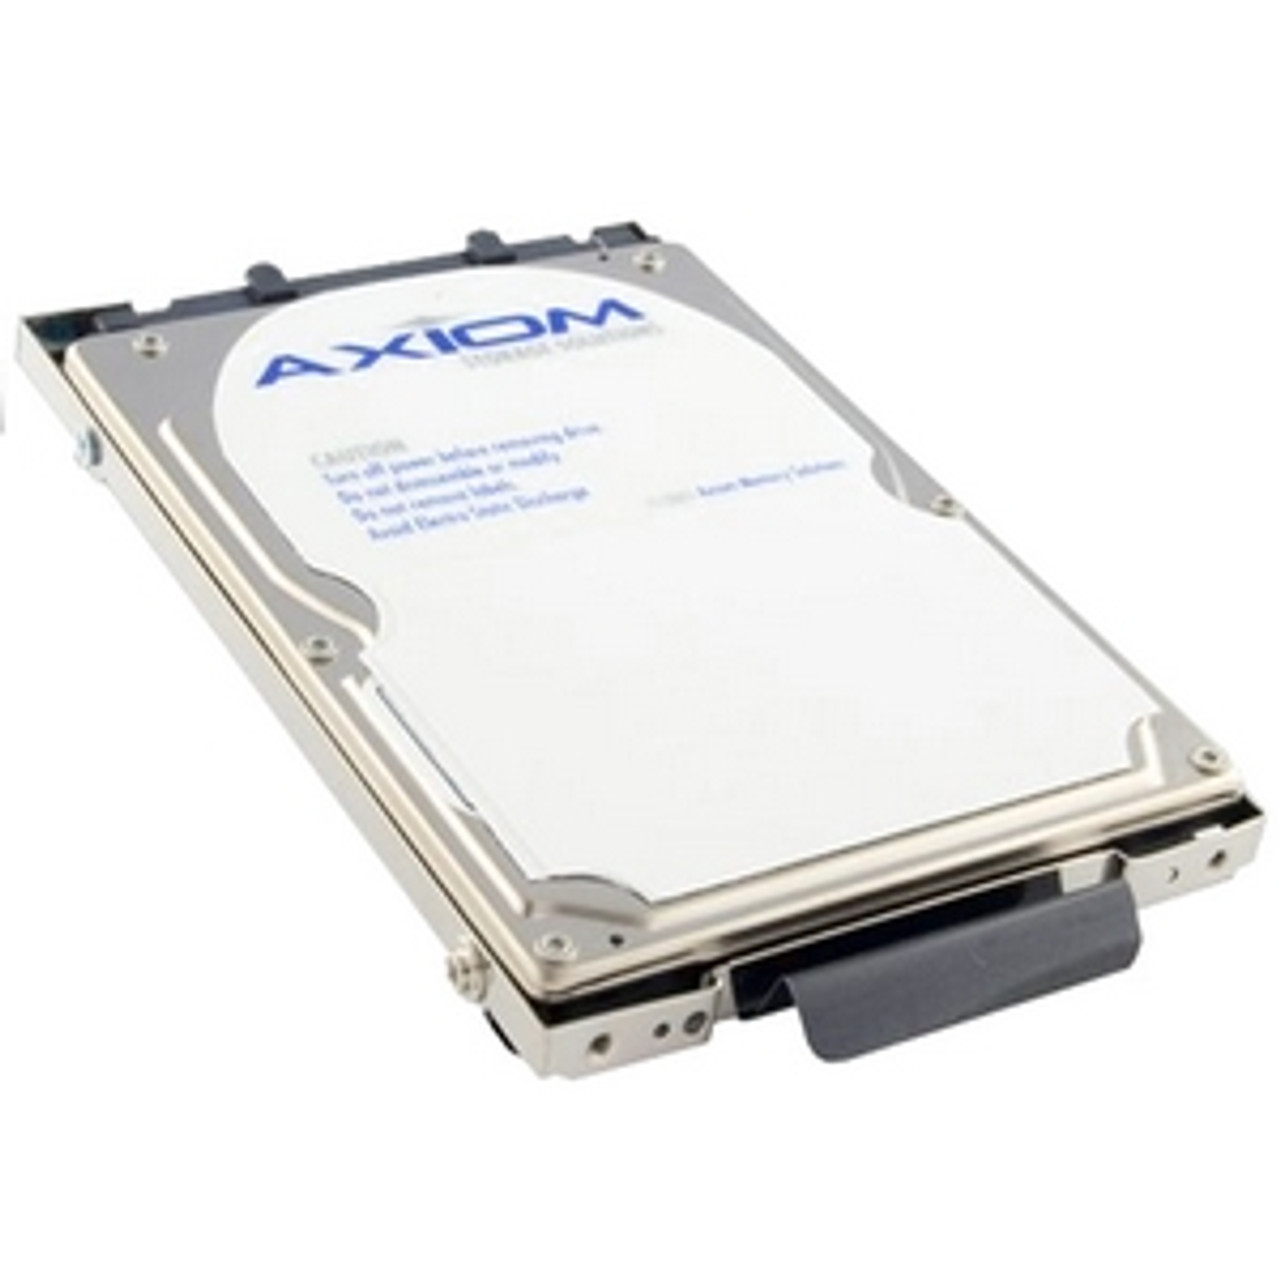 AXD-1320 - Axiom 20 GB 2.5 Plug-in Module Hard Drive - IDE